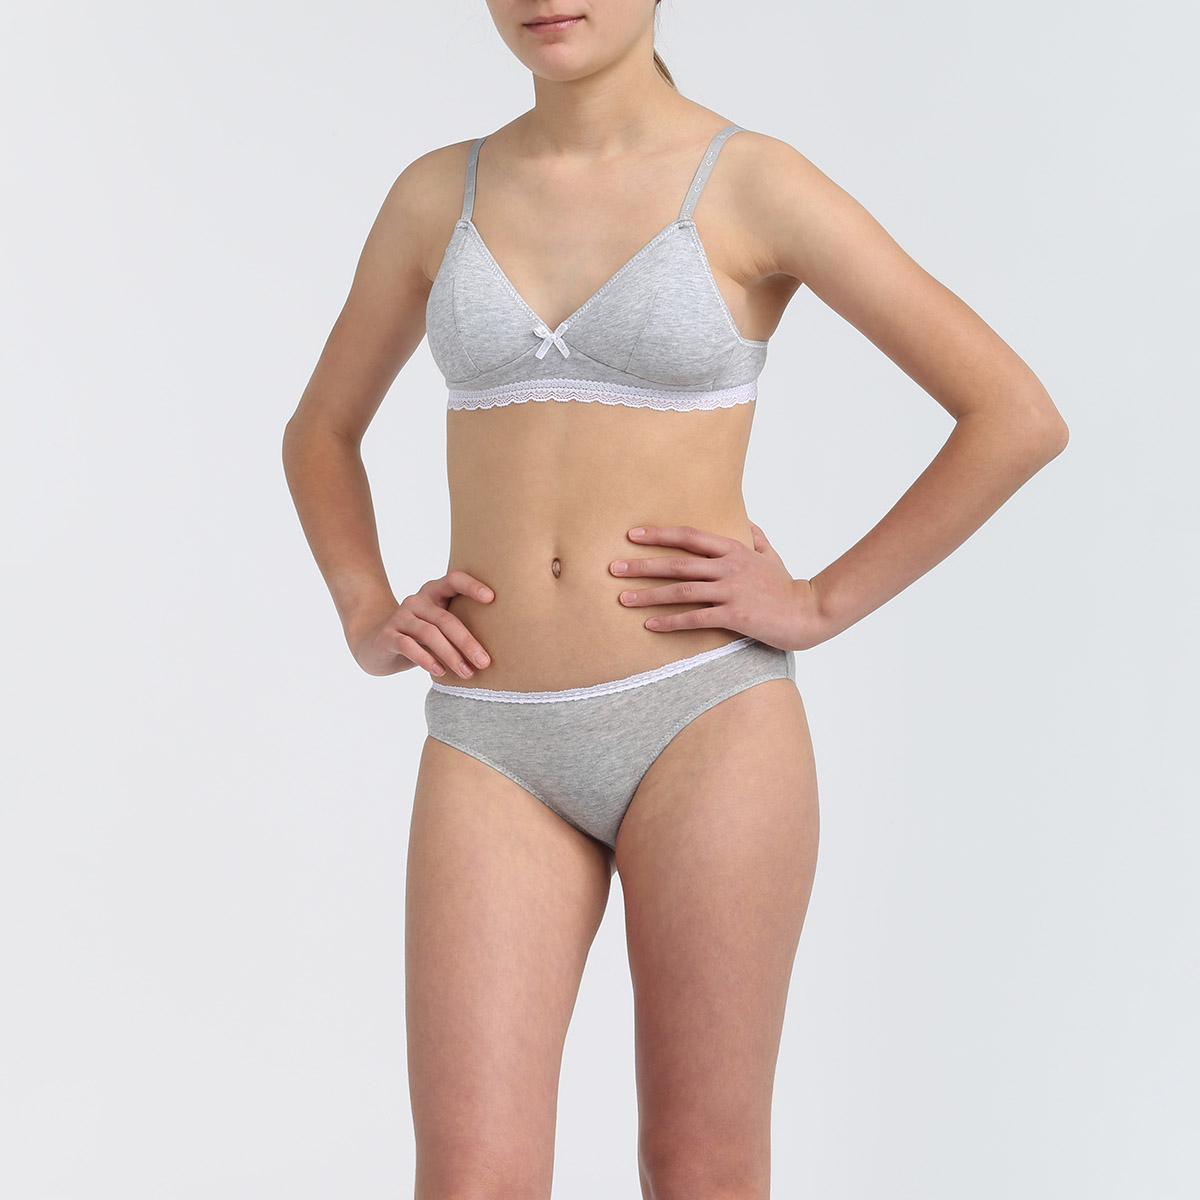 SHAPEHIT Woman's Innerwear Cotton Blend Bra Panty Set, Non Wired